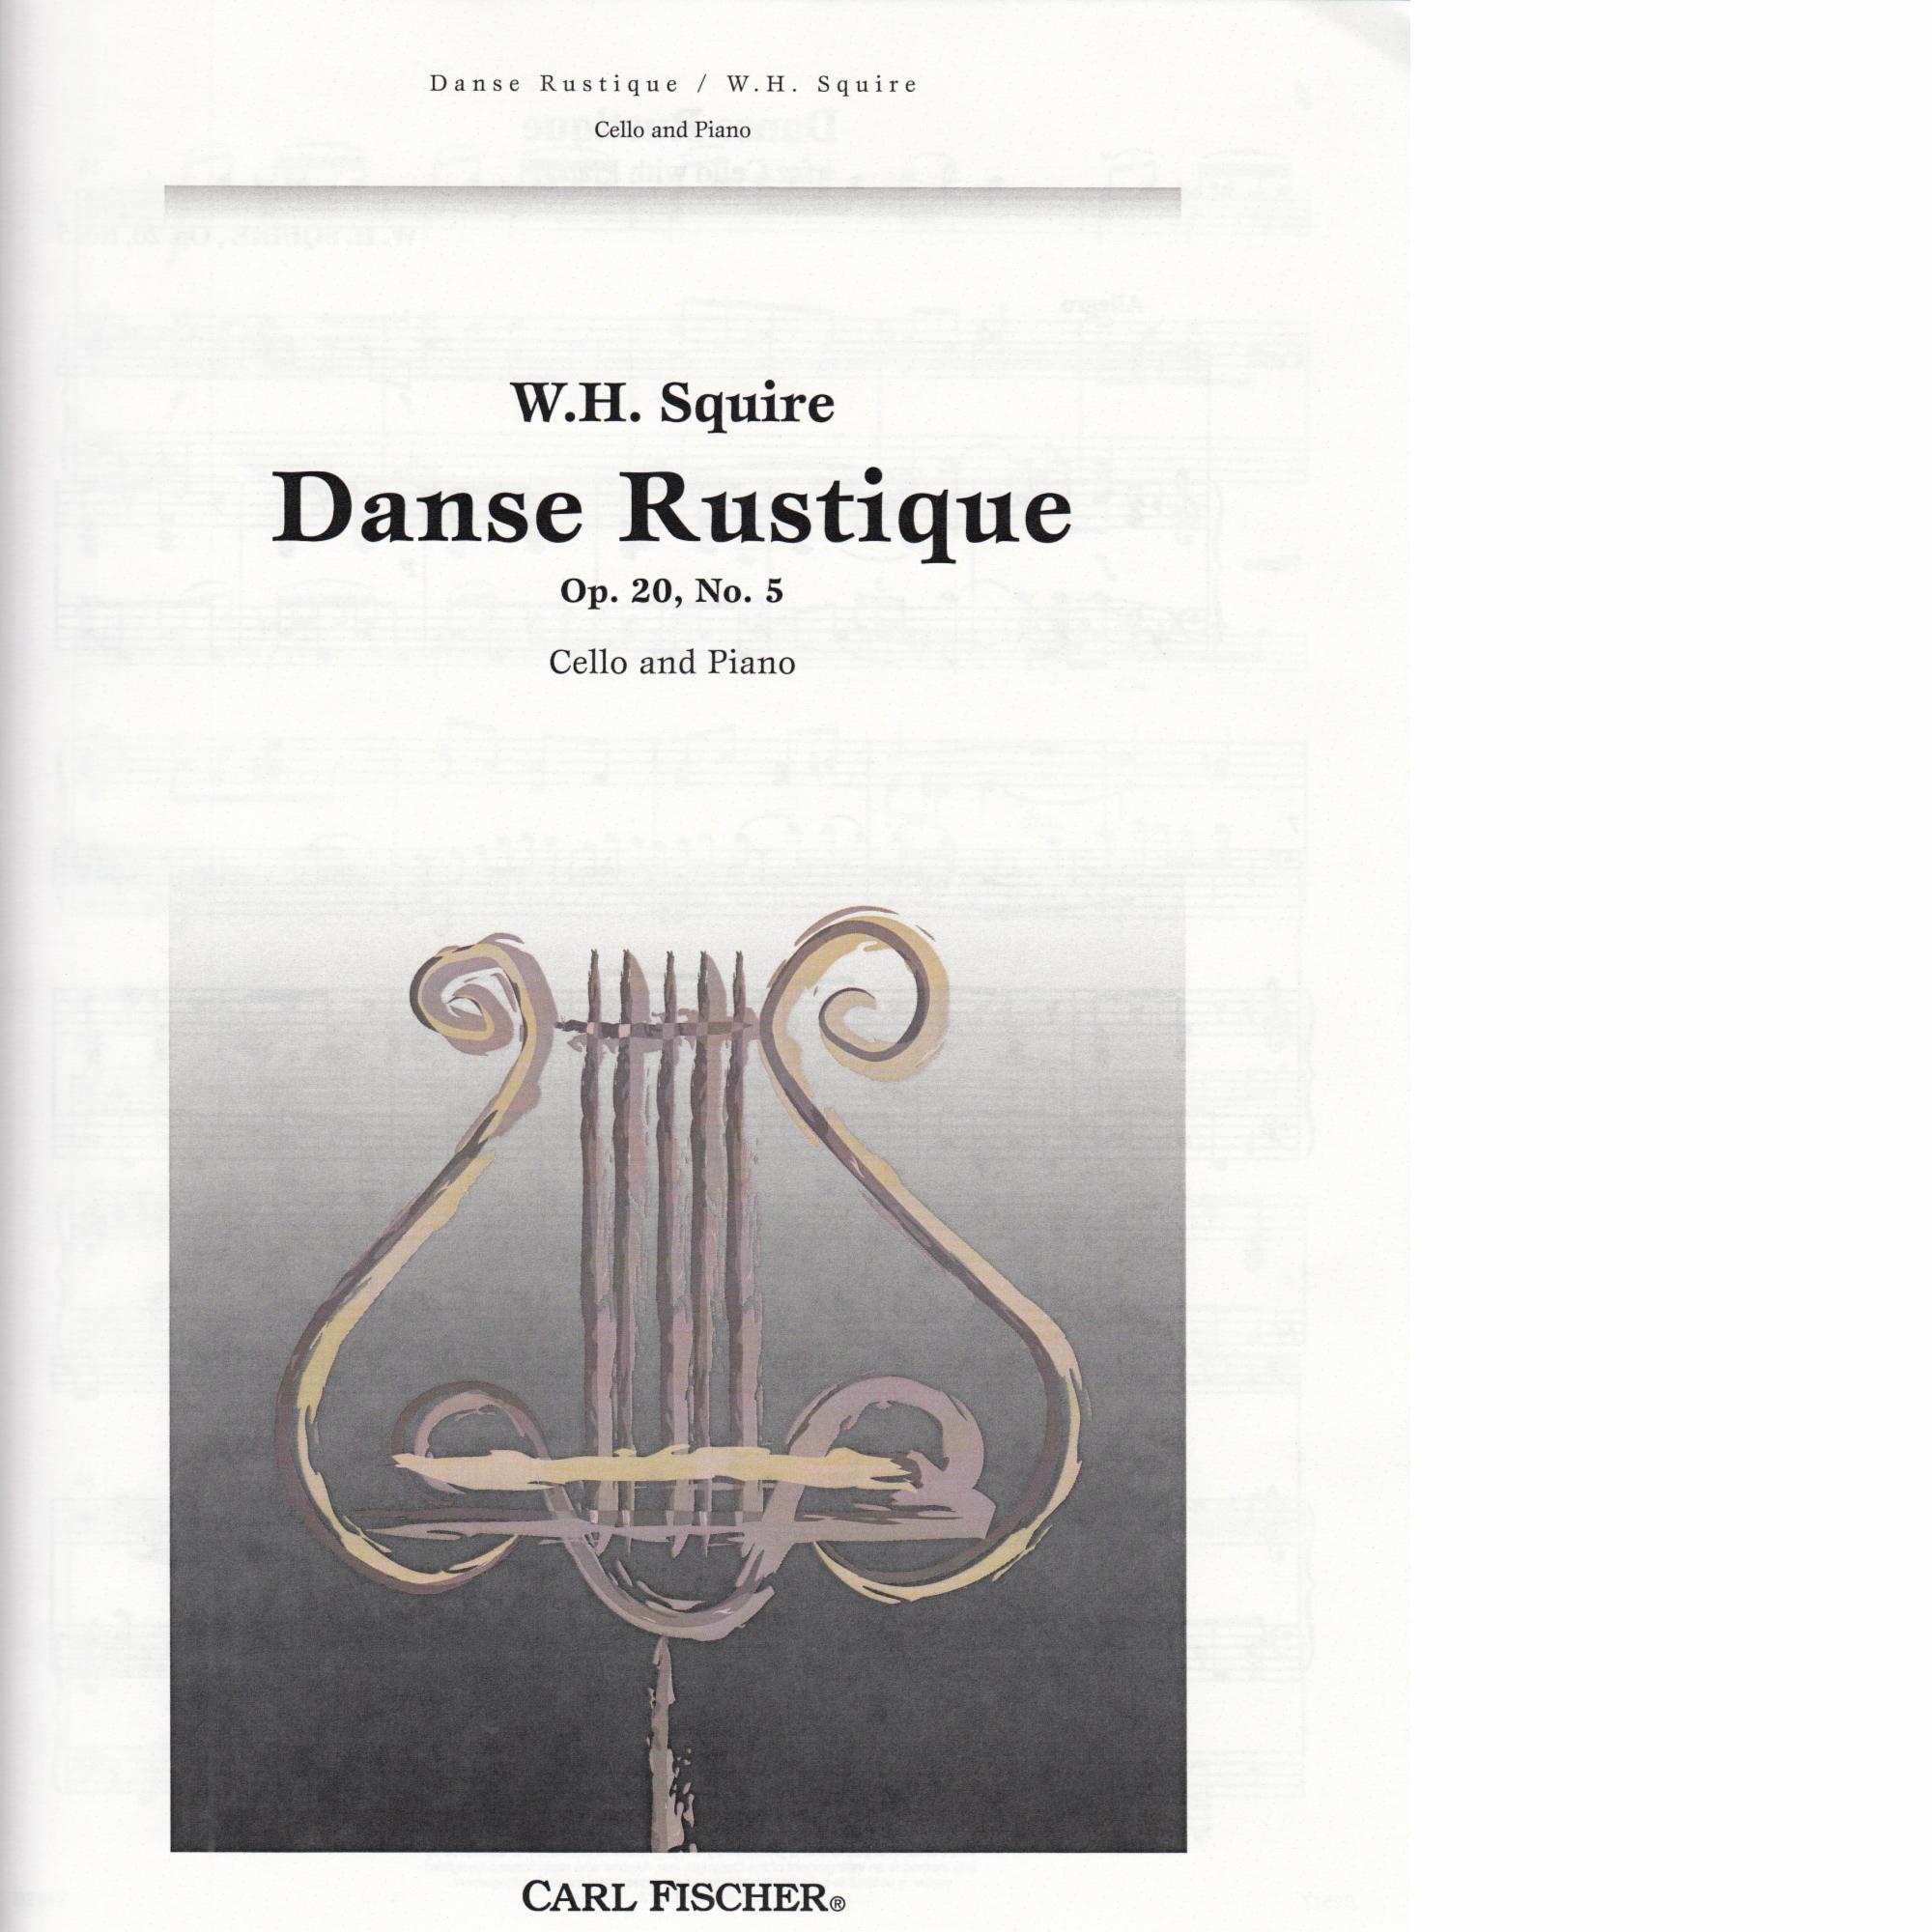 Danse Rustique, Op. 20, No. 5 for Cello and Piano